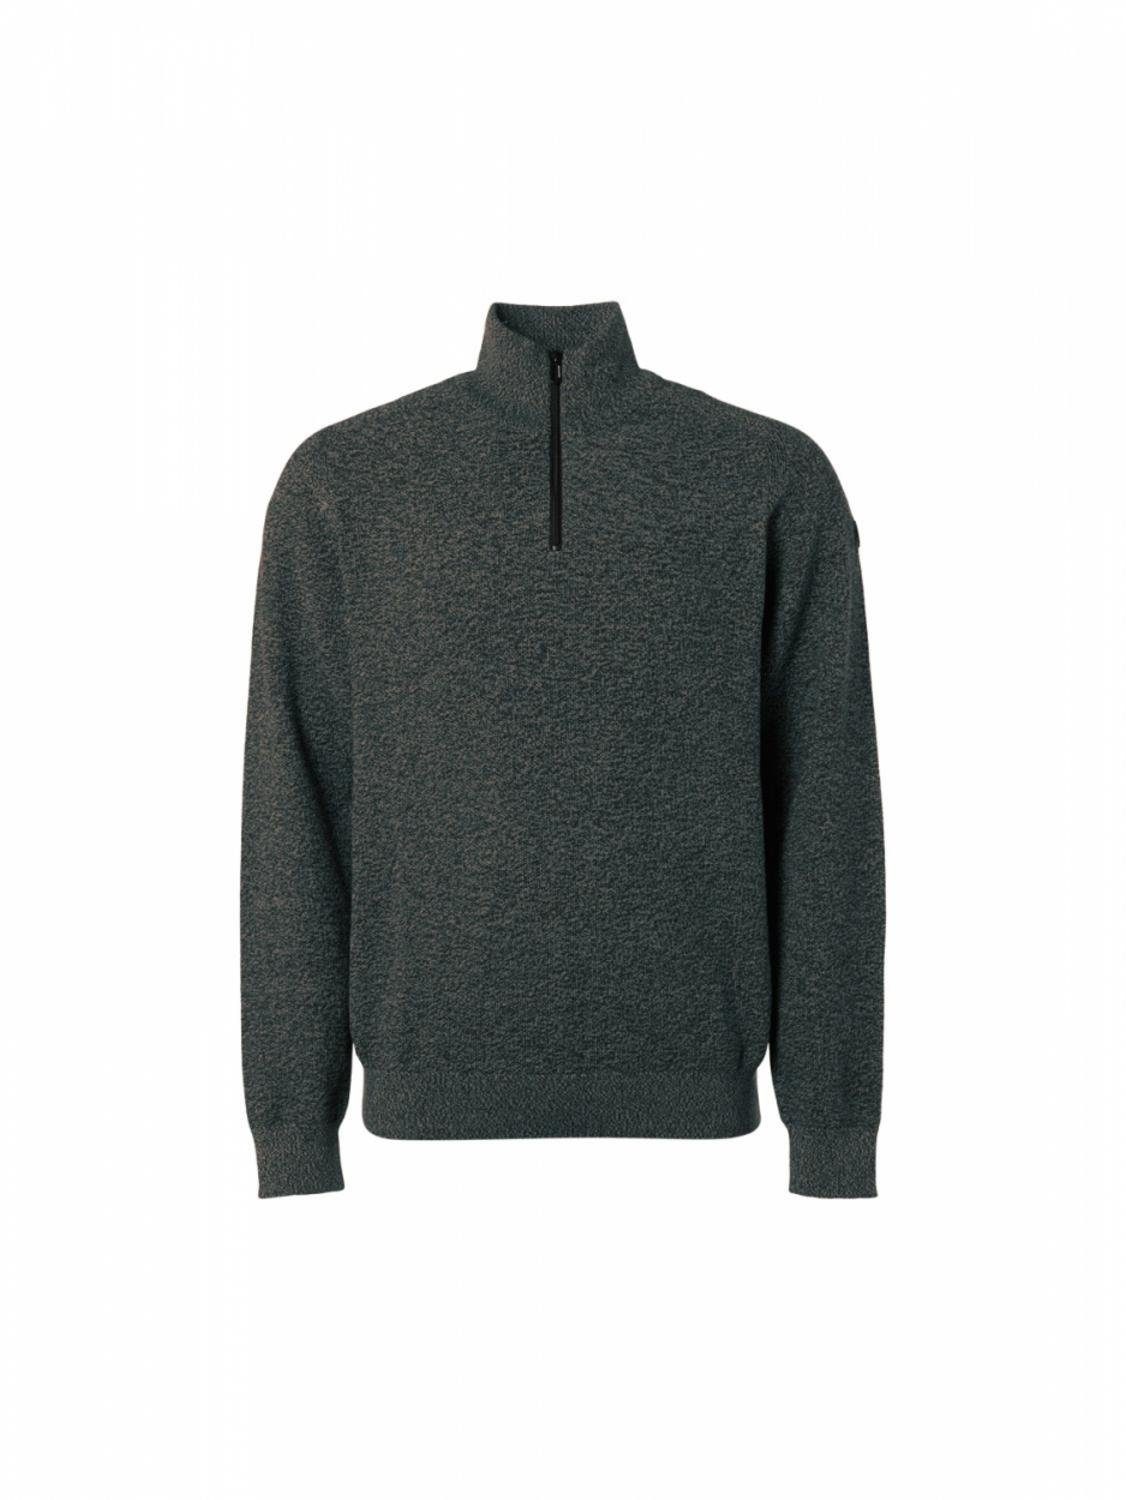 NO EXCESS Sweatshirt Pullover Half Zipper 3 Colour Melan